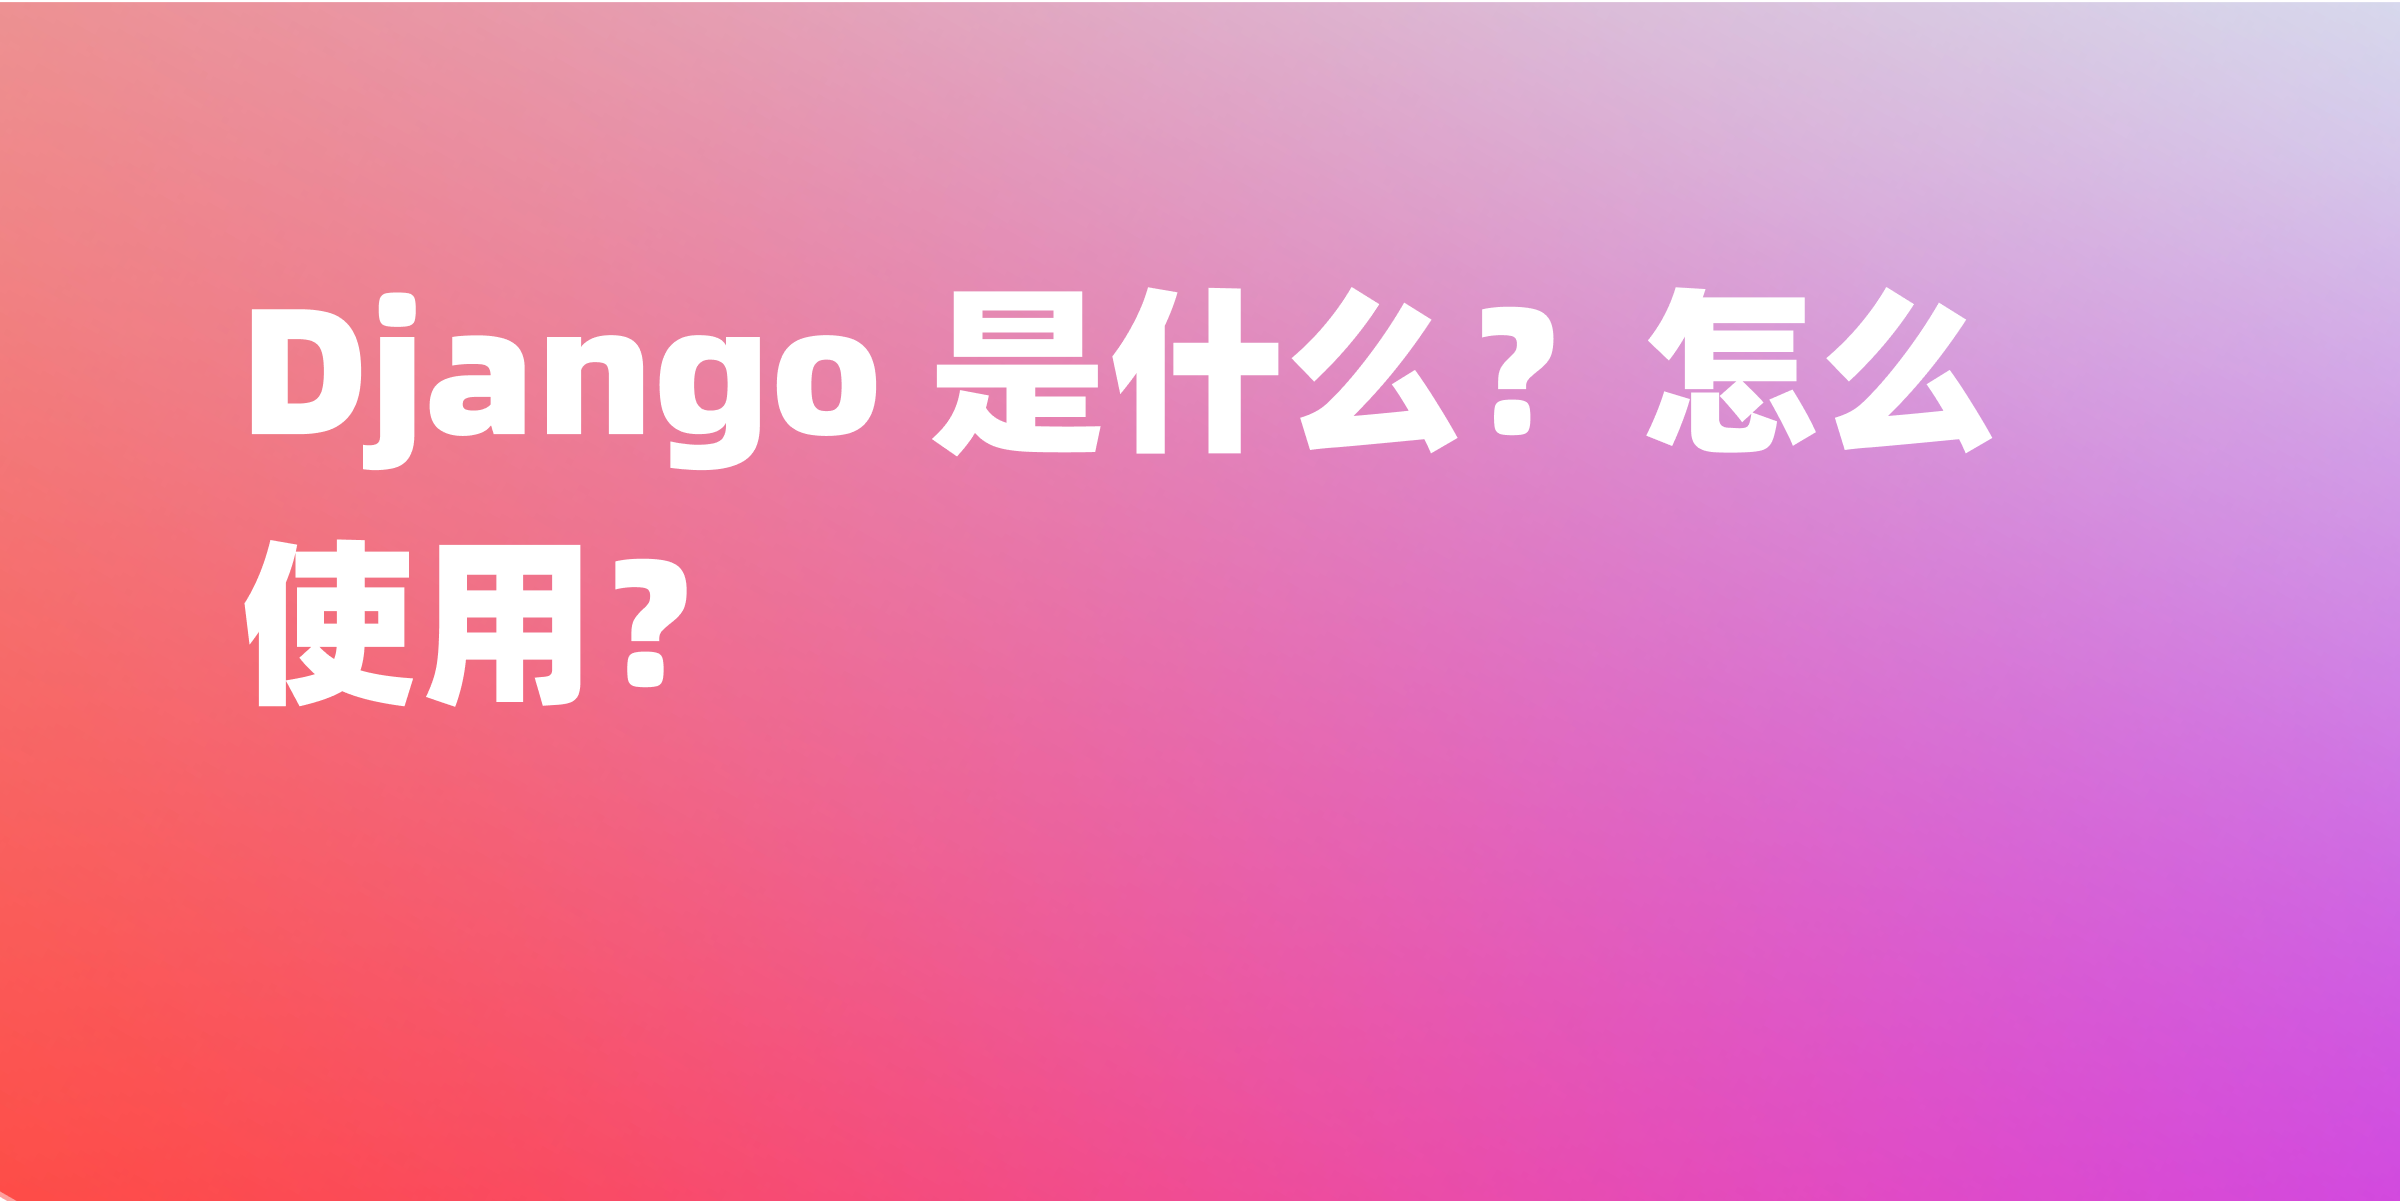 Django 是什么？怎么使用？